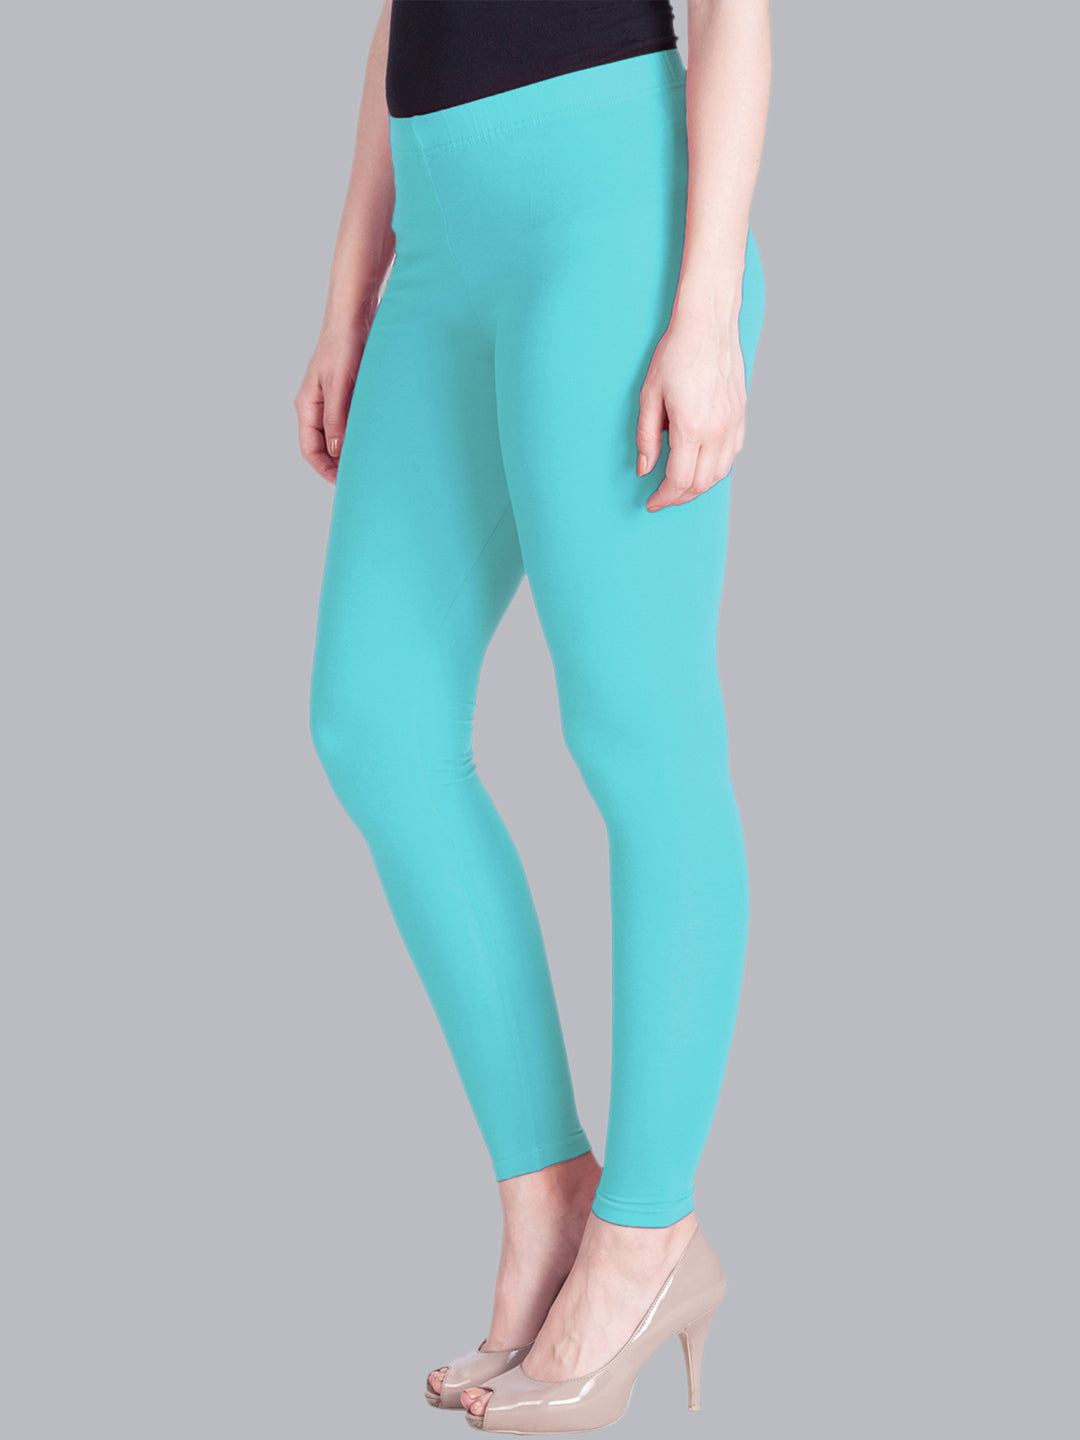 Buy online Turquoise Solid Ankle Length Leggings from Capris & Leggings for  Women by V-mart for ₹270 at 10% off